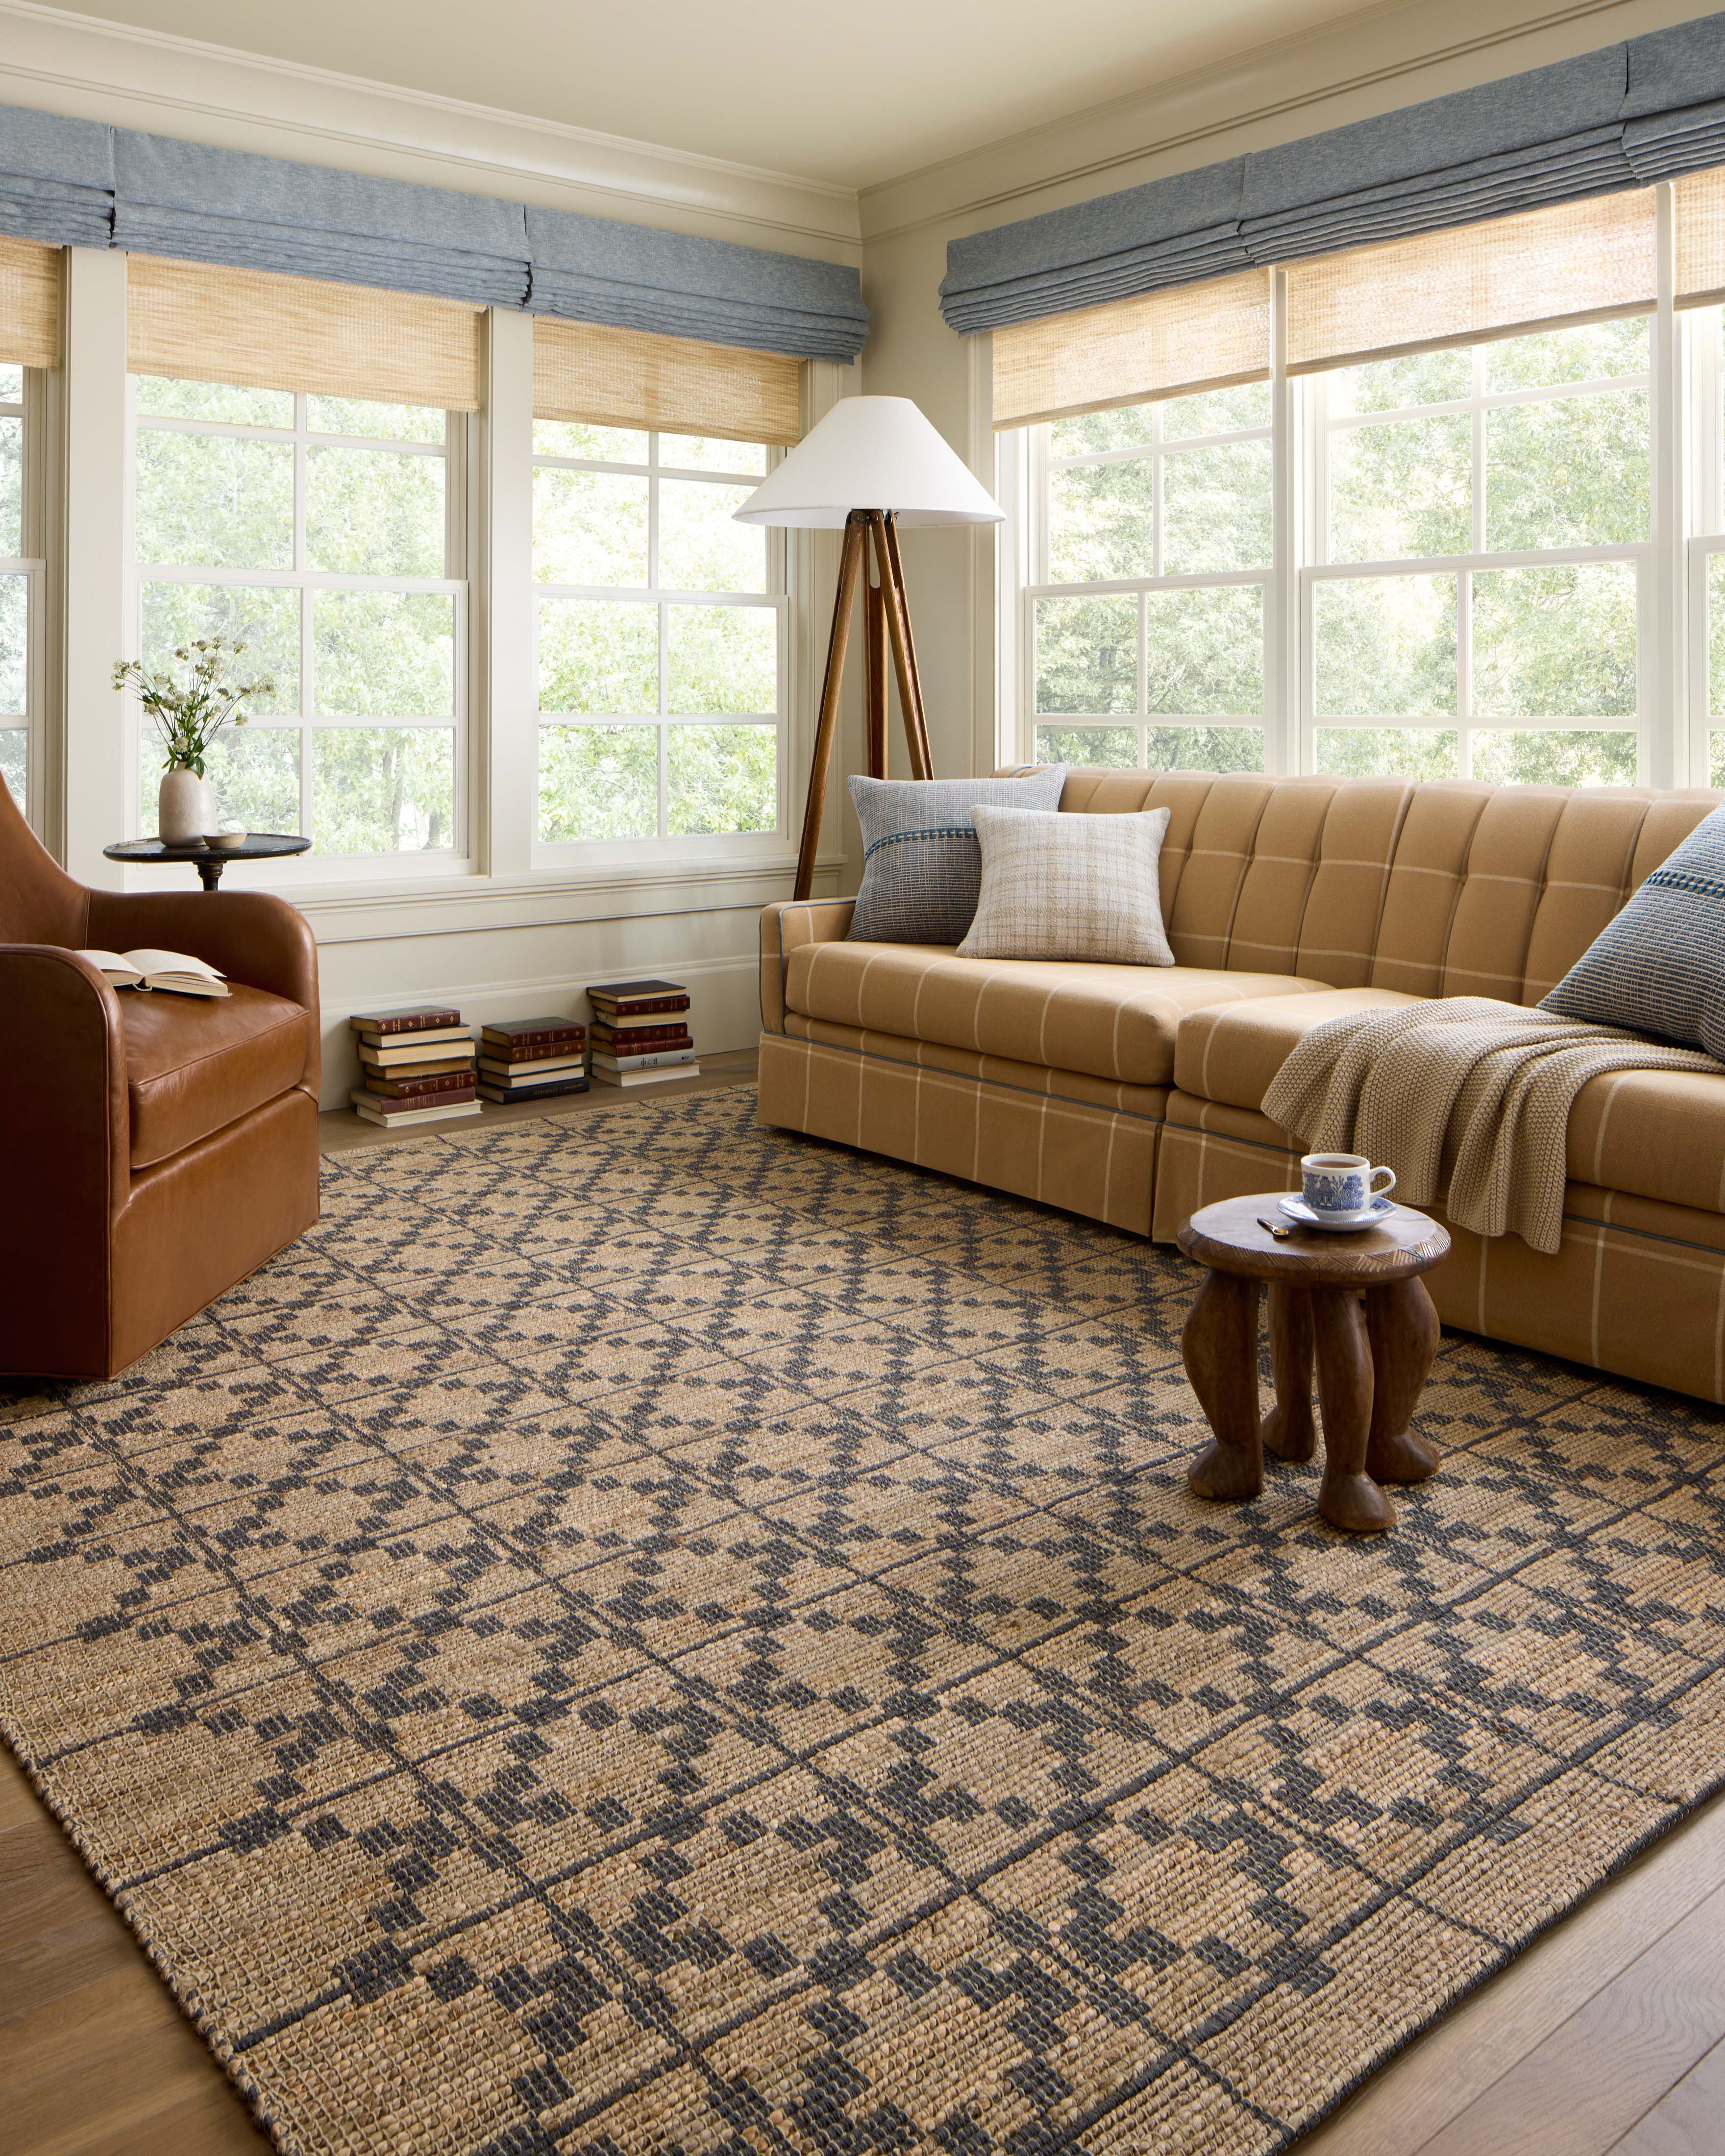 Lifestyle Floors Indigo Skandi Wool-Blend Round Rug